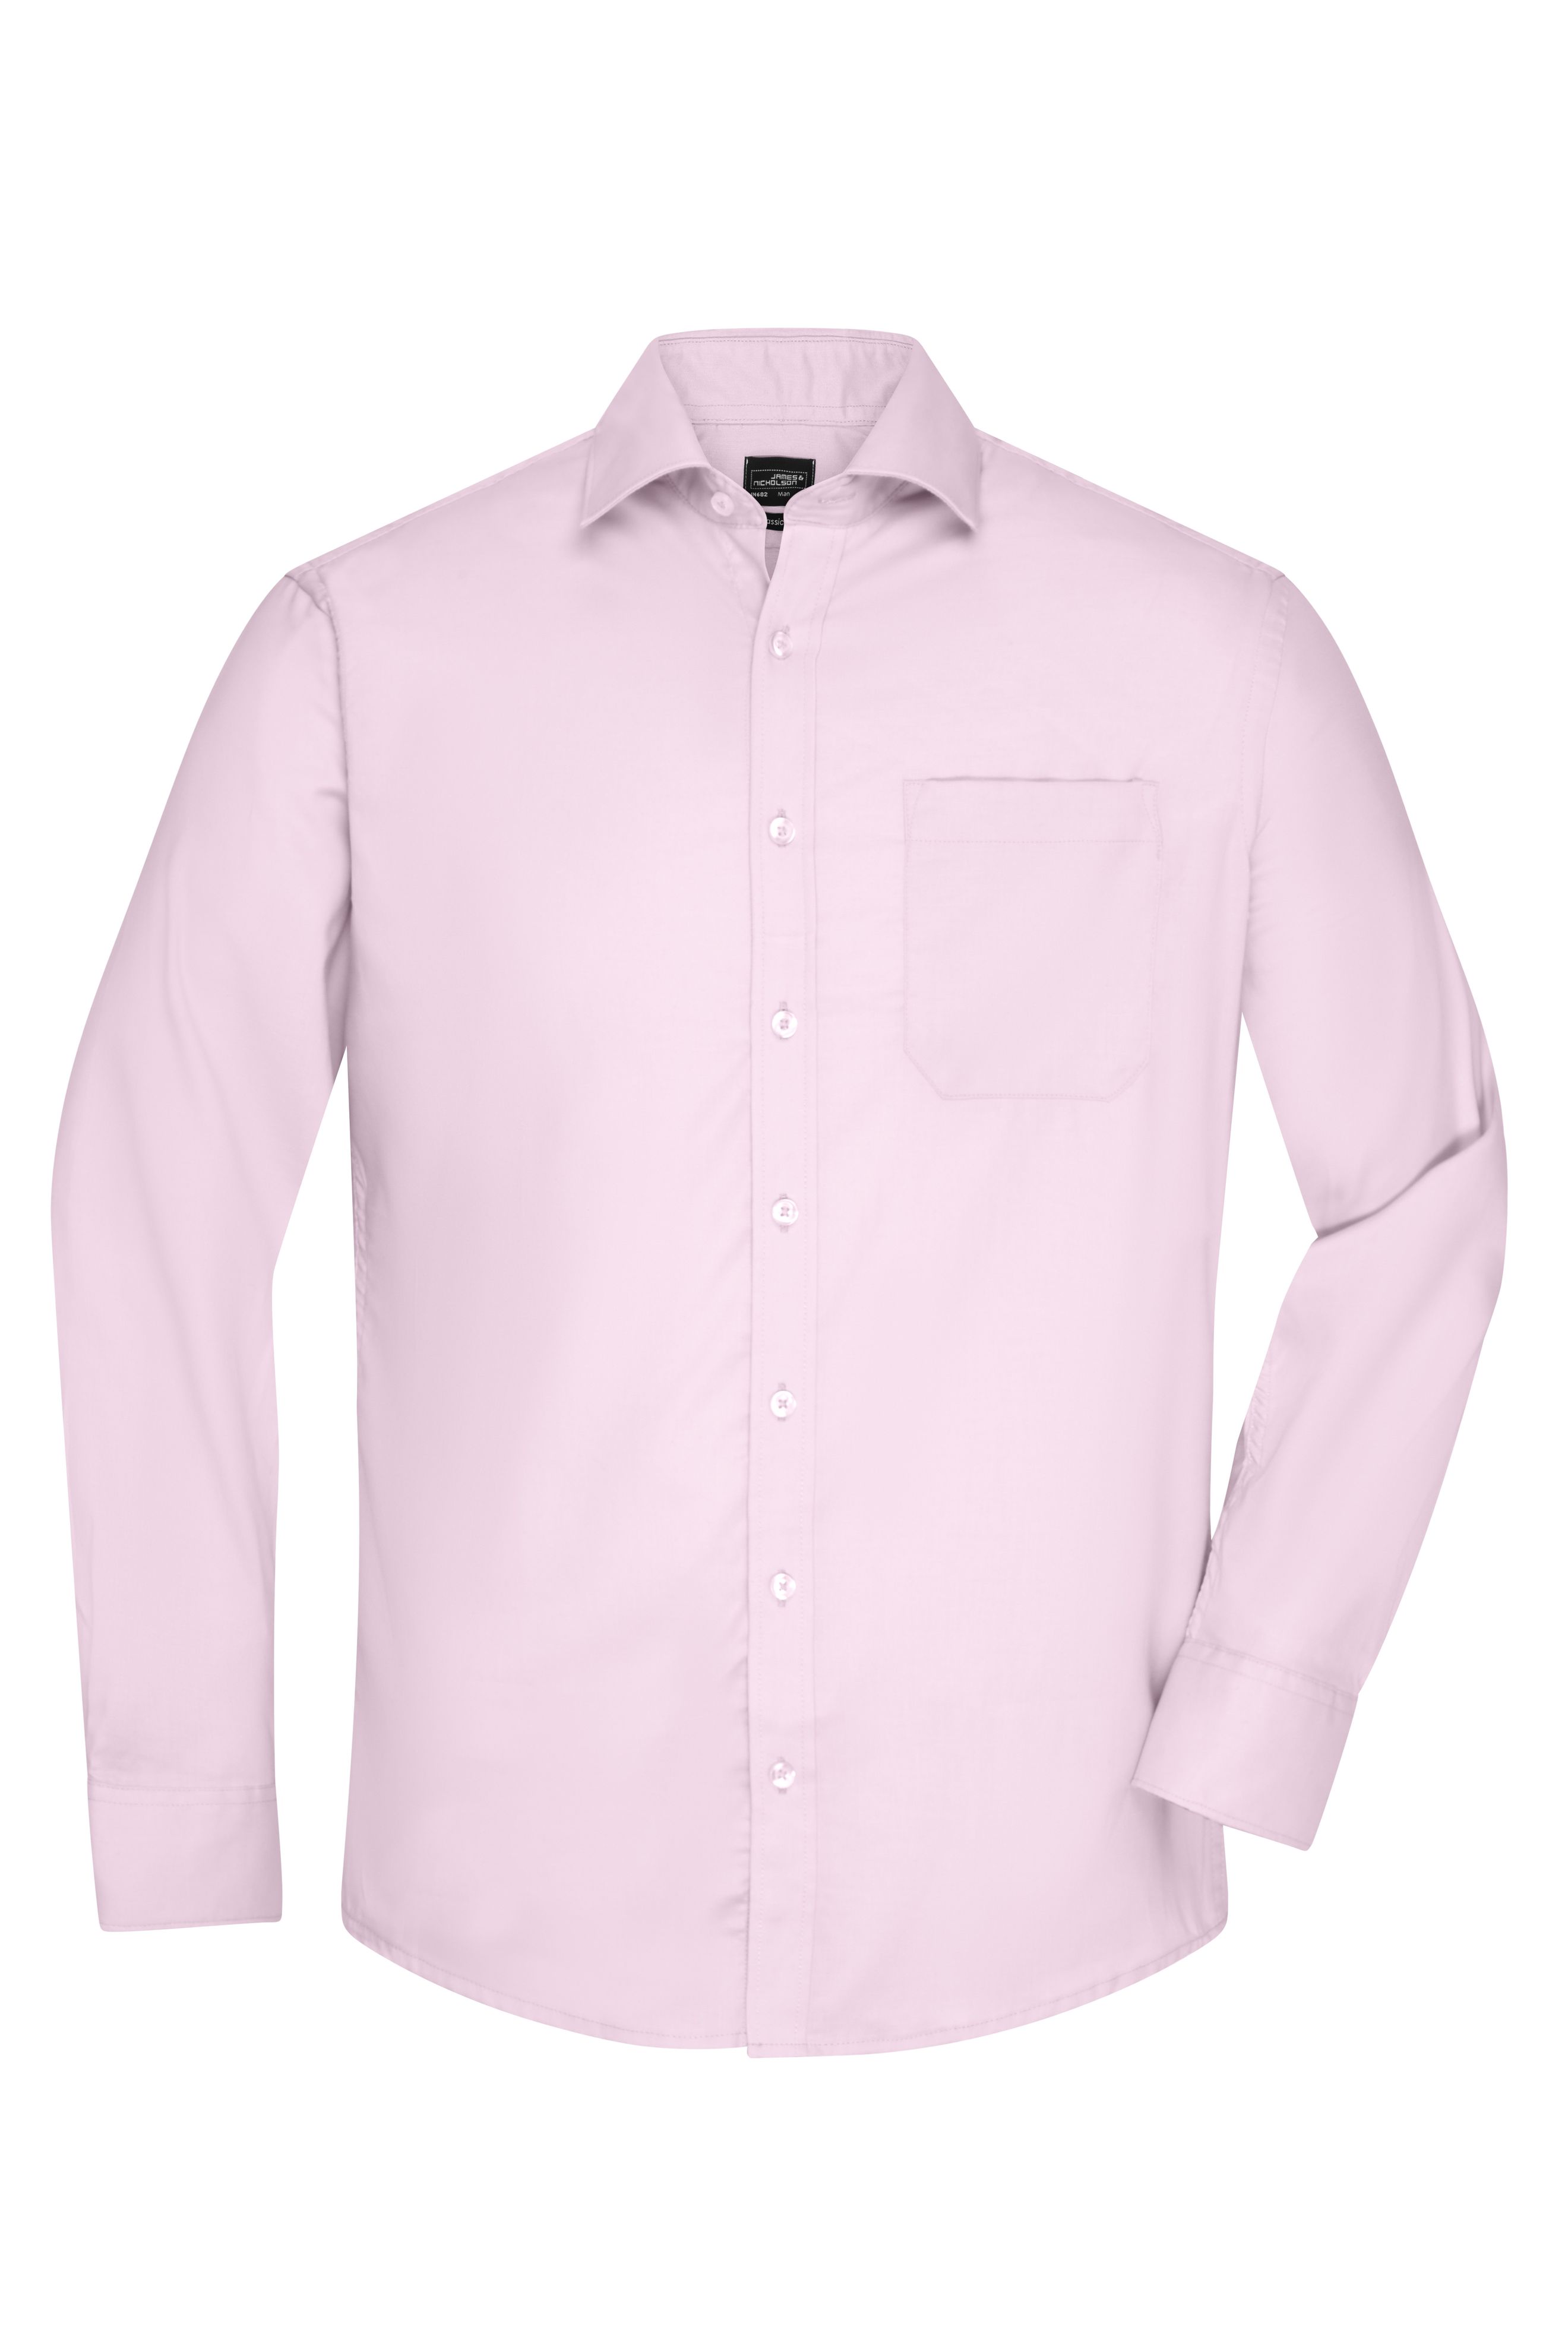 Men's Shirt Longsleeve Micro-Twill JN682 Klassisches Shirt in pflegeleichter Baumwollqualität